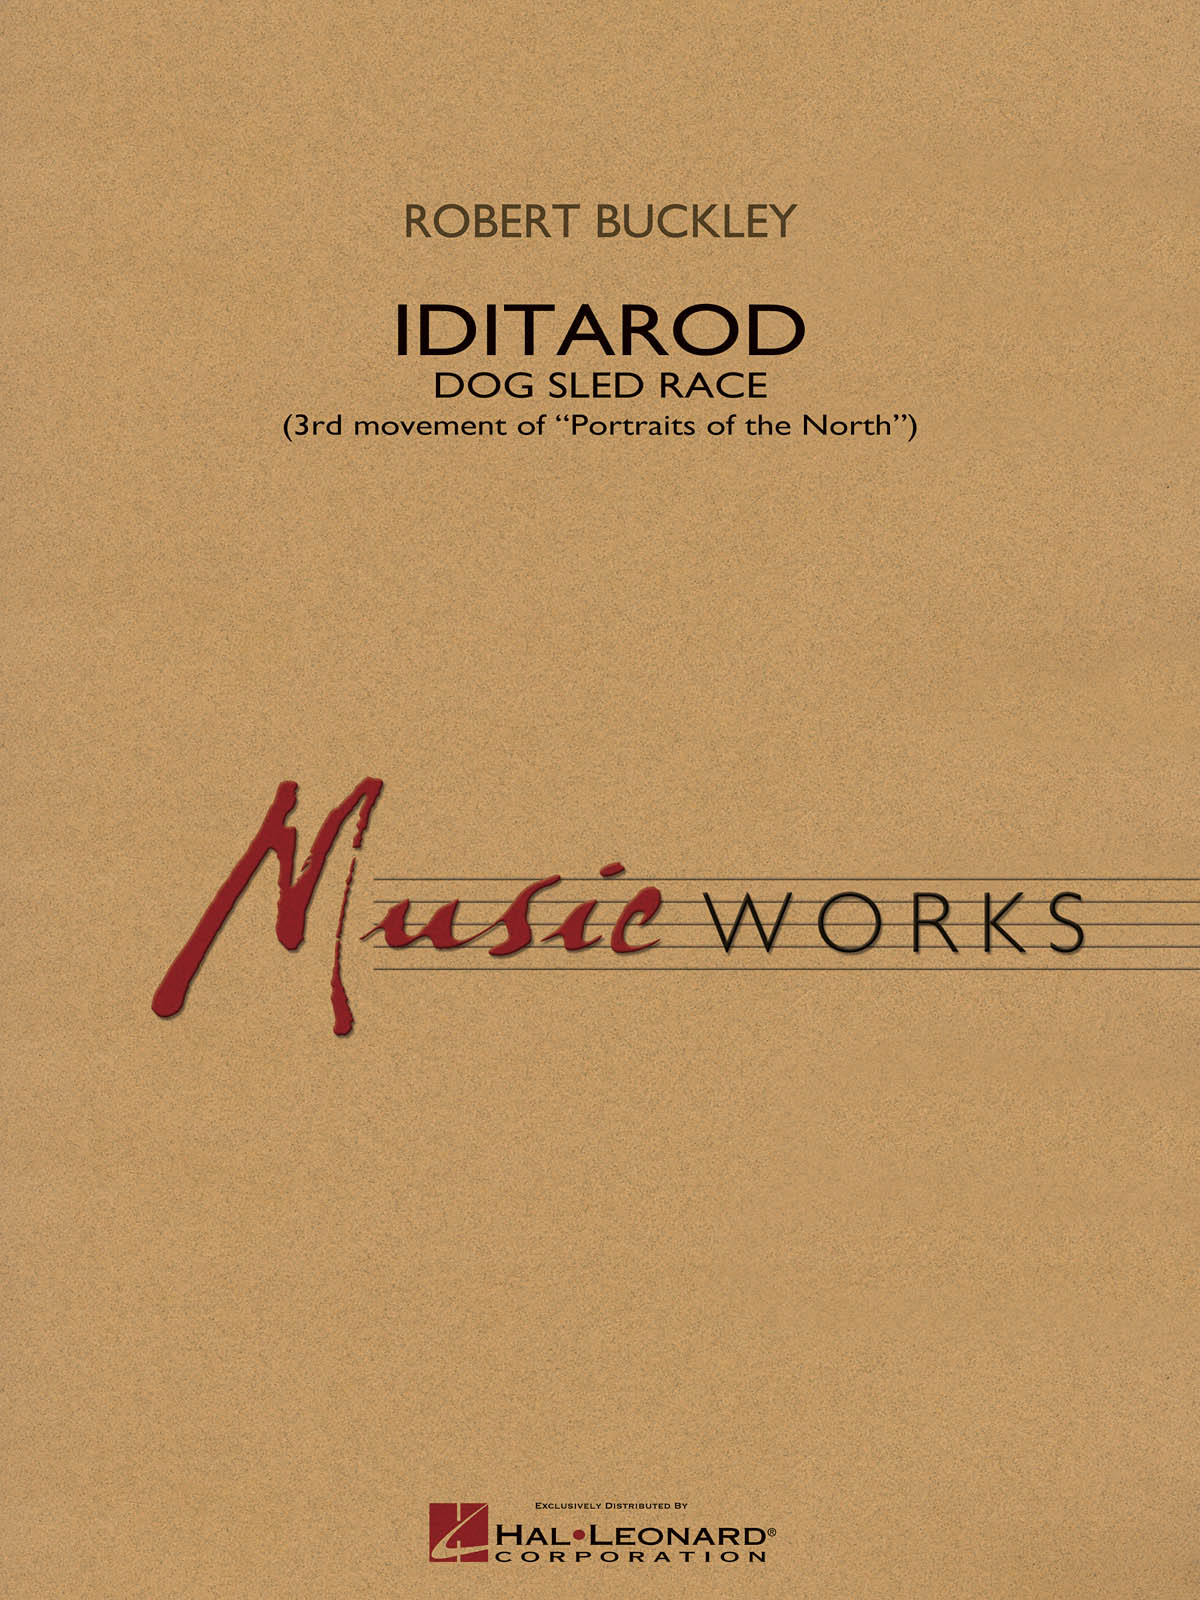 Iditarod(Third Movement of “Portraits of the North”)